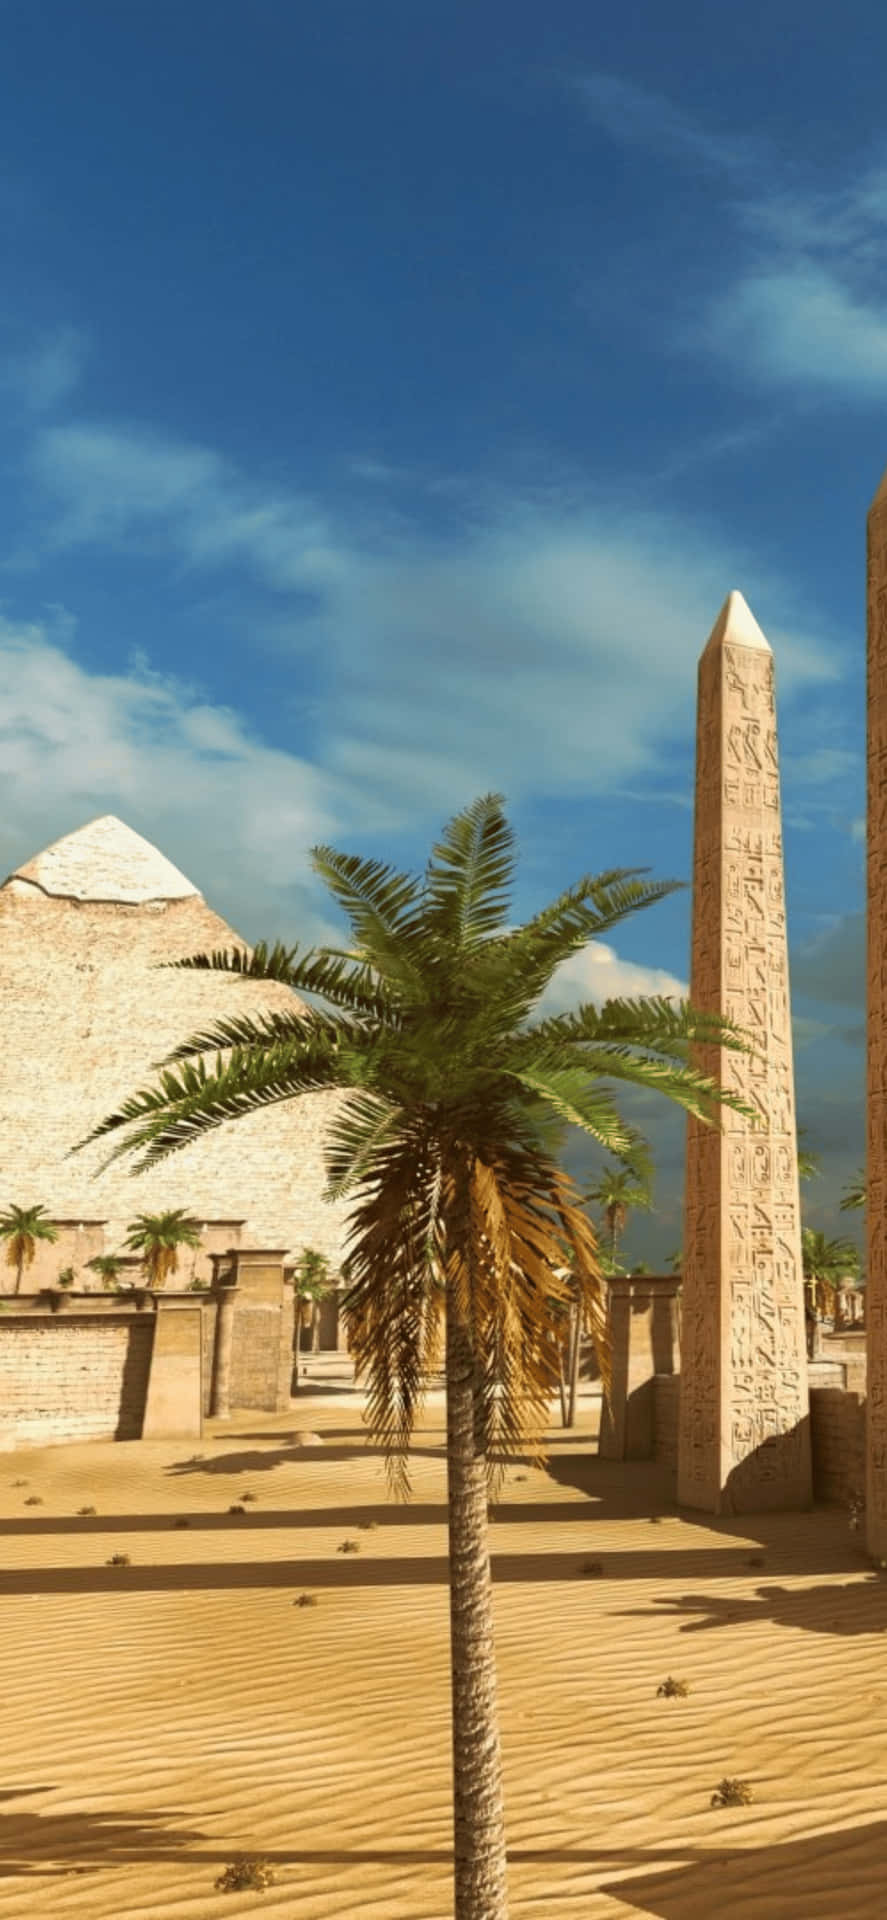 En3d-bild Av En Antik Egyptisk Pyramid.